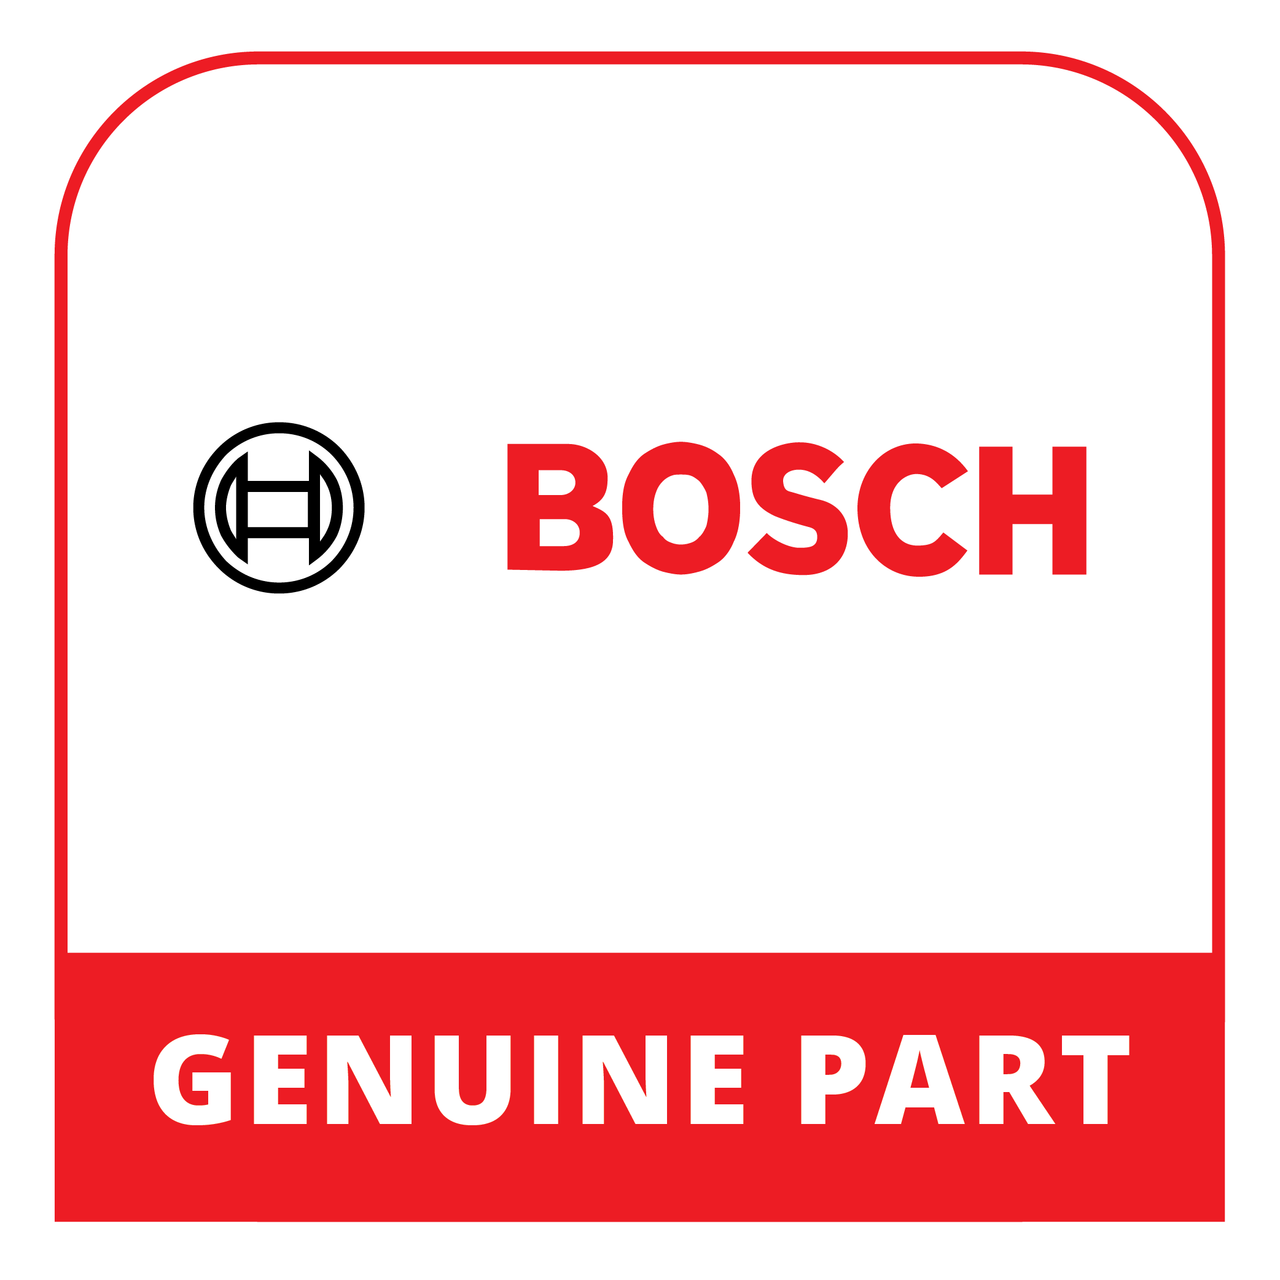 Bosch (Thermador) 10014244 - Bracket - Genuine Bosch (Thermador) Part